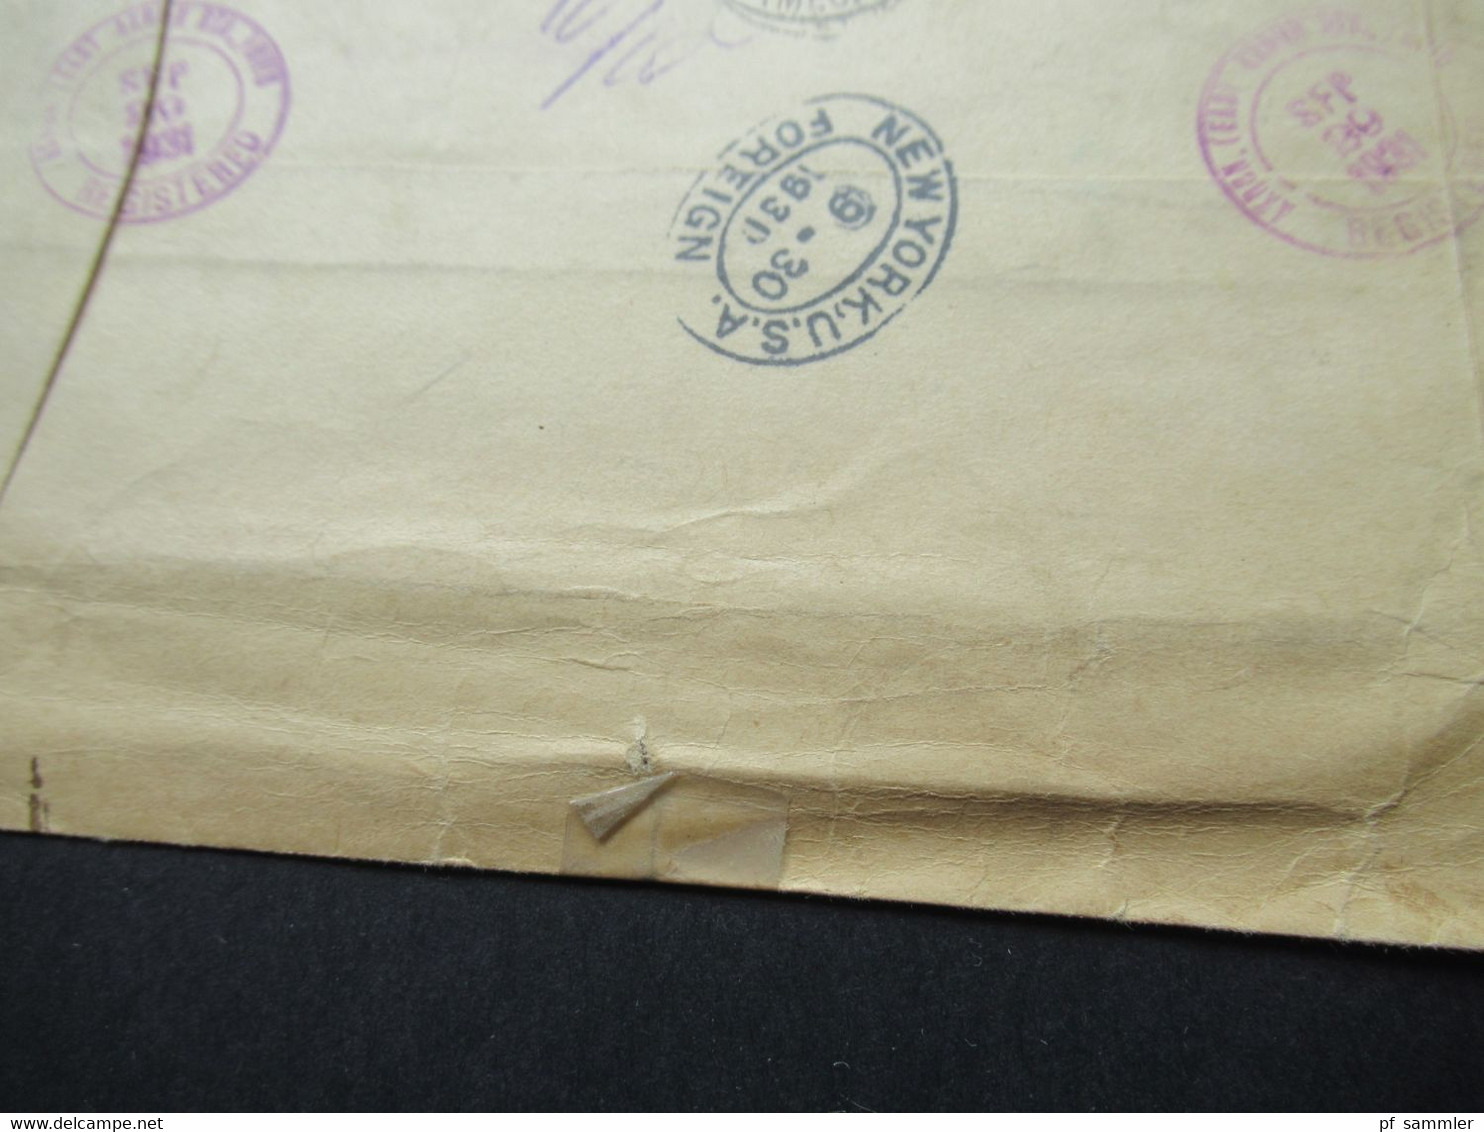 USA 1931 Registered letter nach Schwerin mit Aufkleber Customs (Douane) May be officially opened mit vielen Stempeln